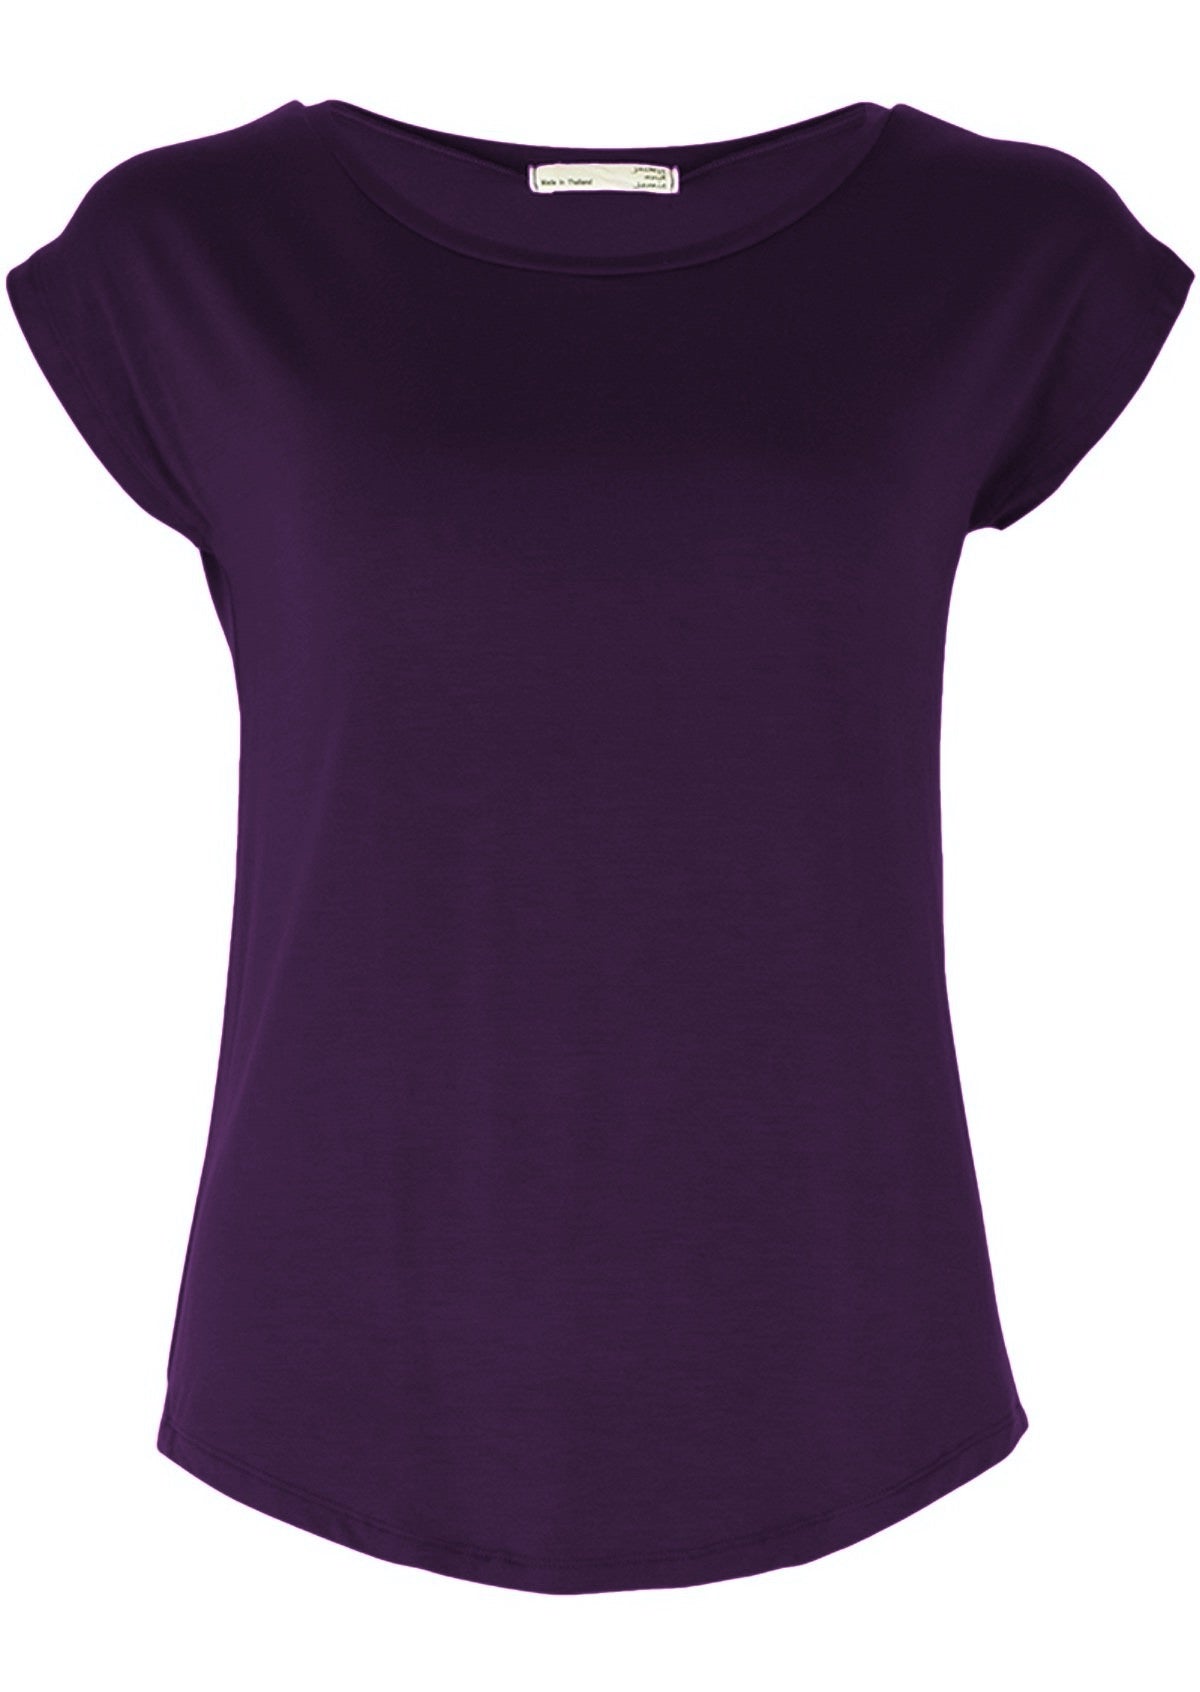 Women's dark purple rayon jersey t-shirt.